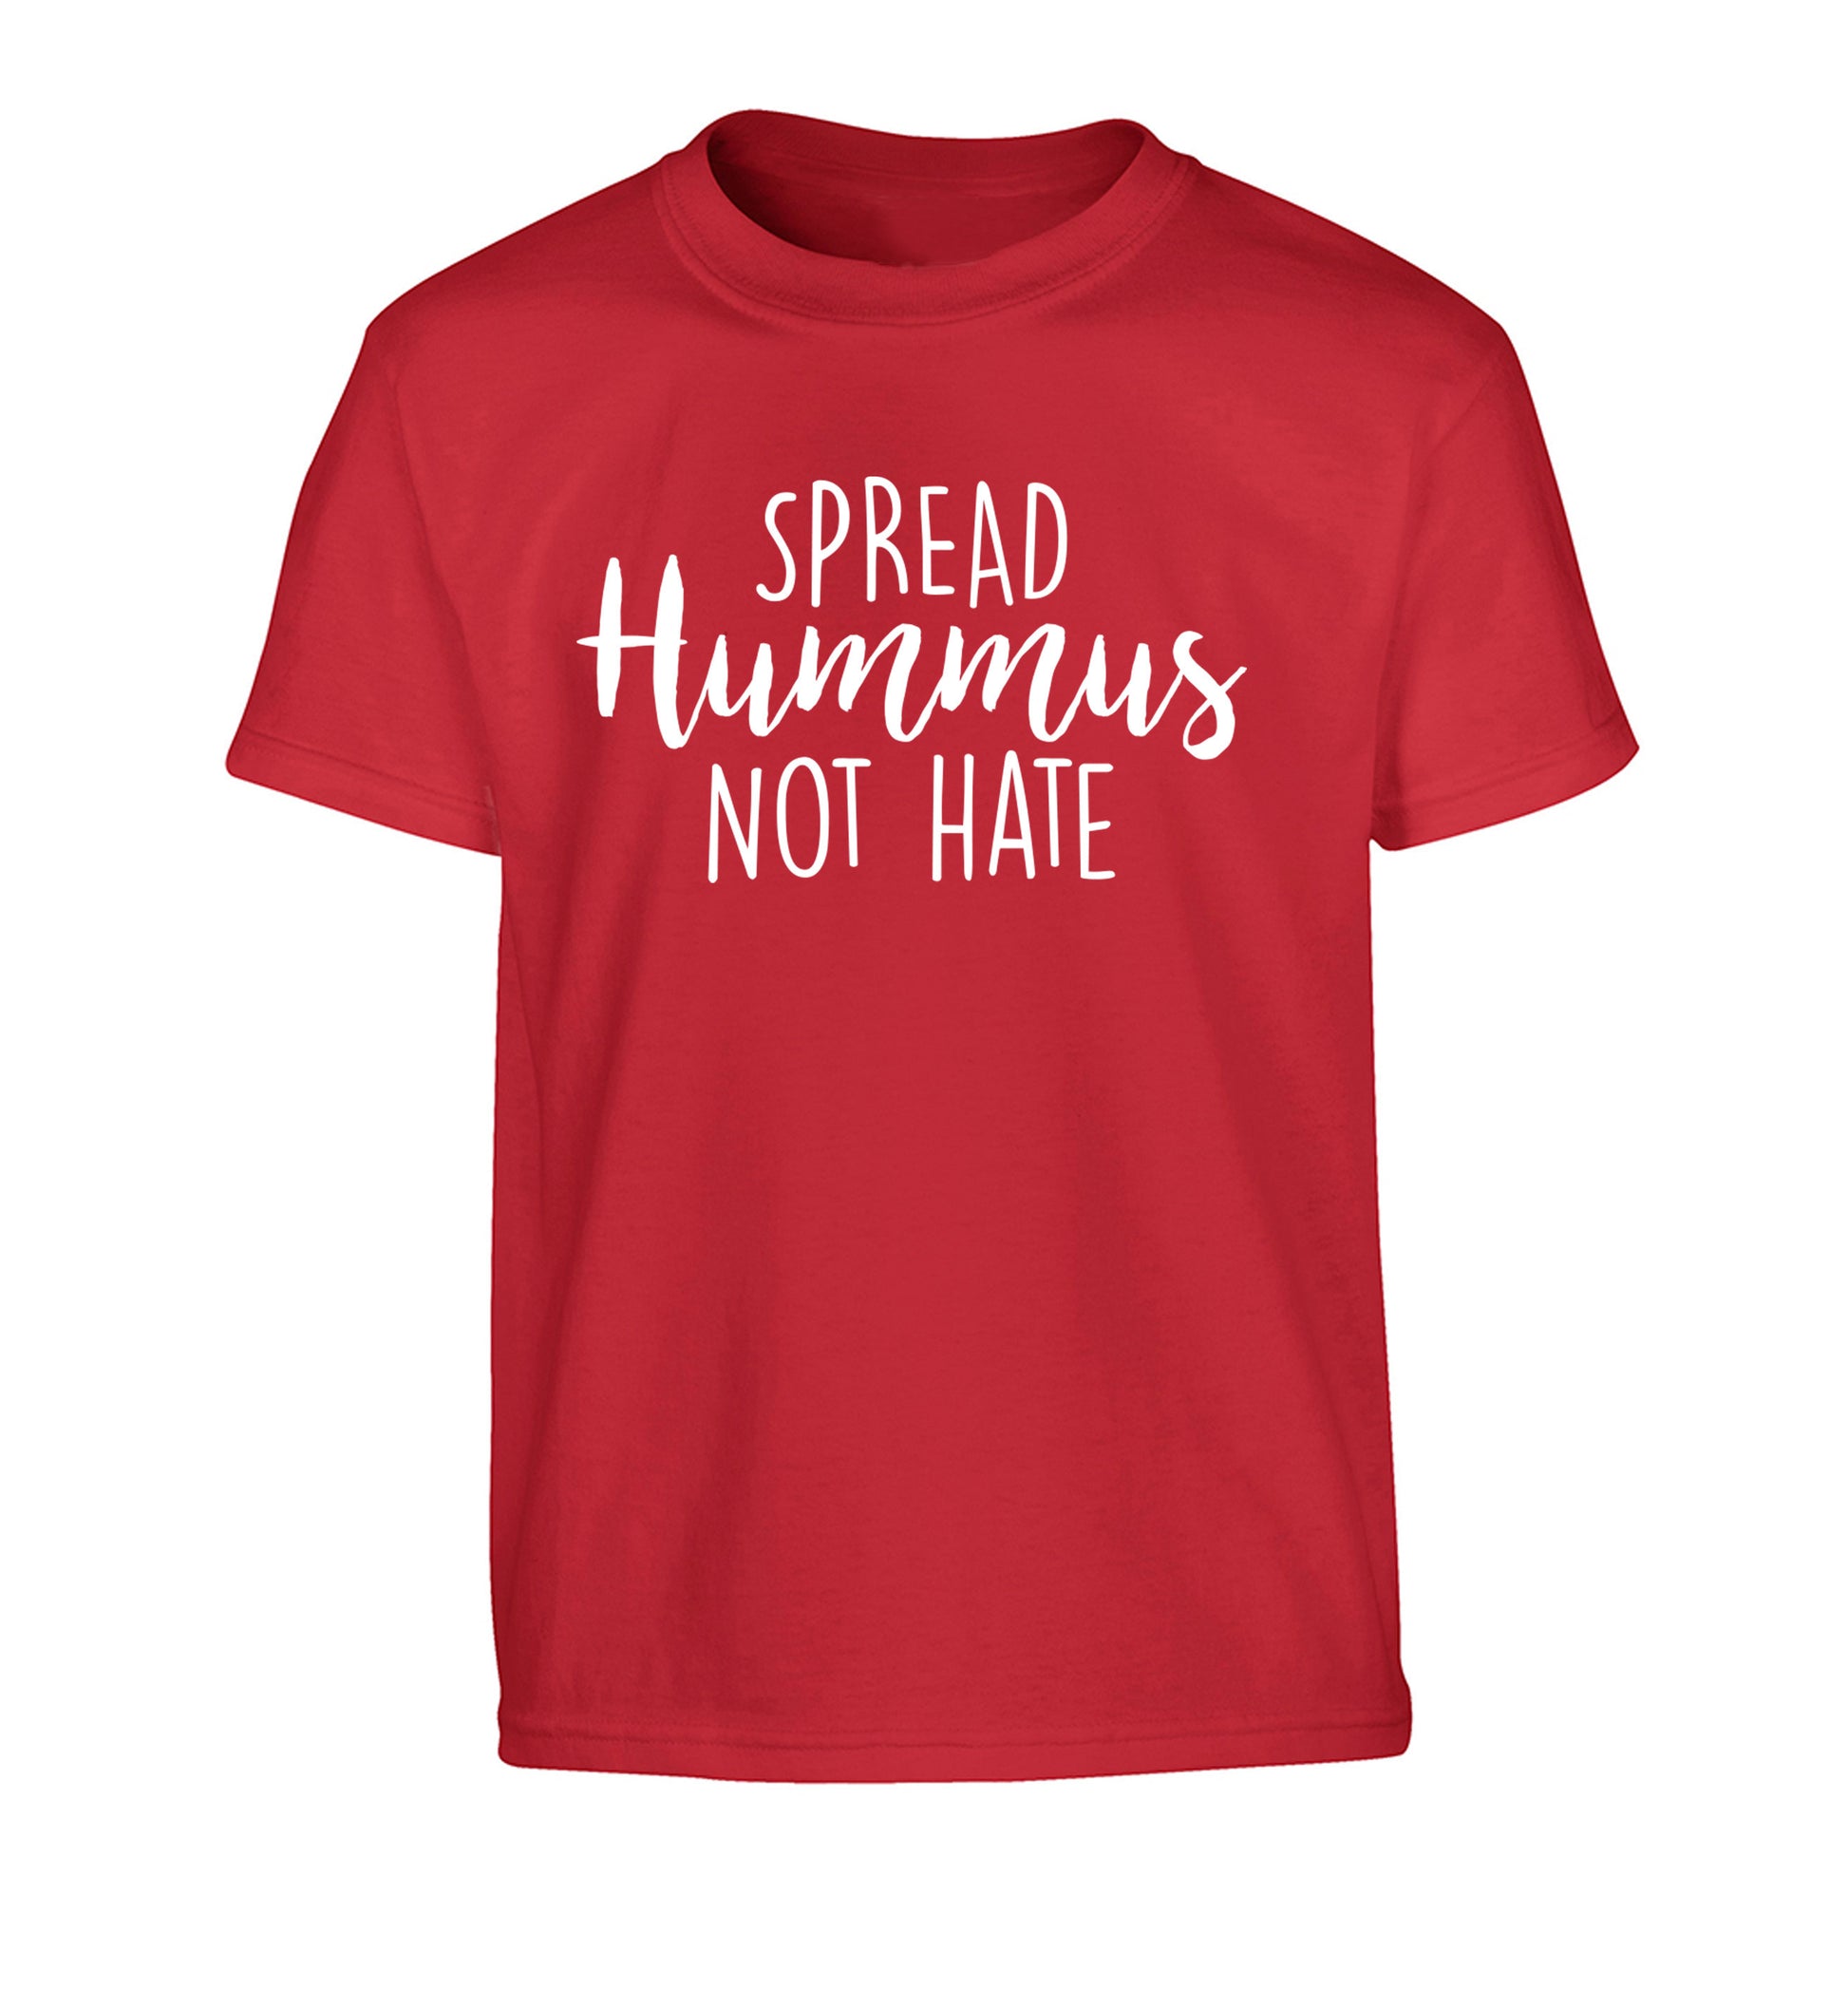 Spread hummus not hate script text Children's red Tshirt 12-14 Years